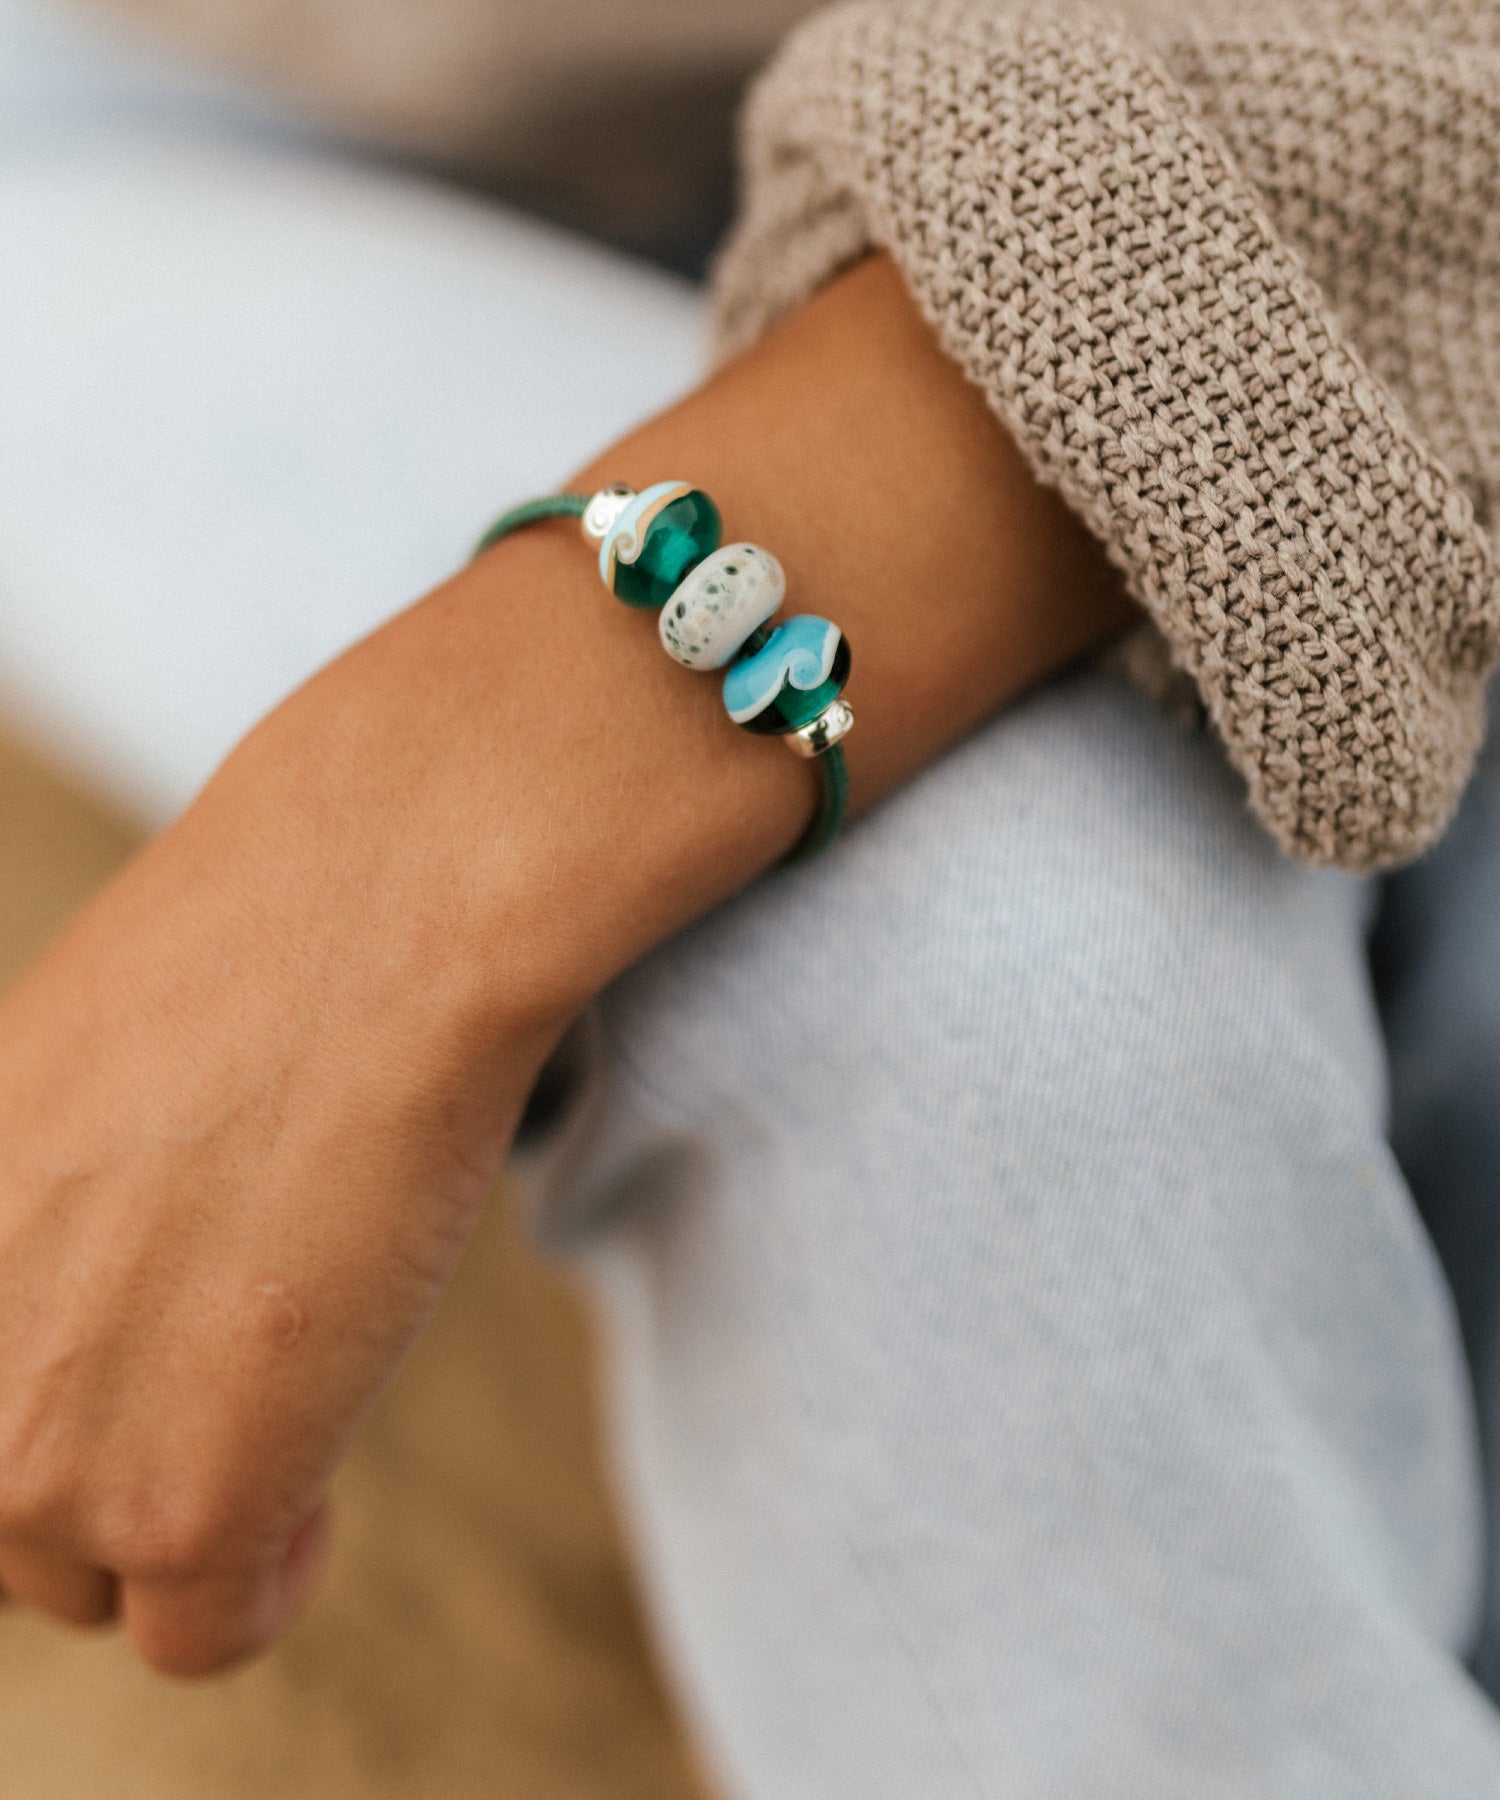 Nalu charity bead jewellery bracelet in blues and green glass beads.